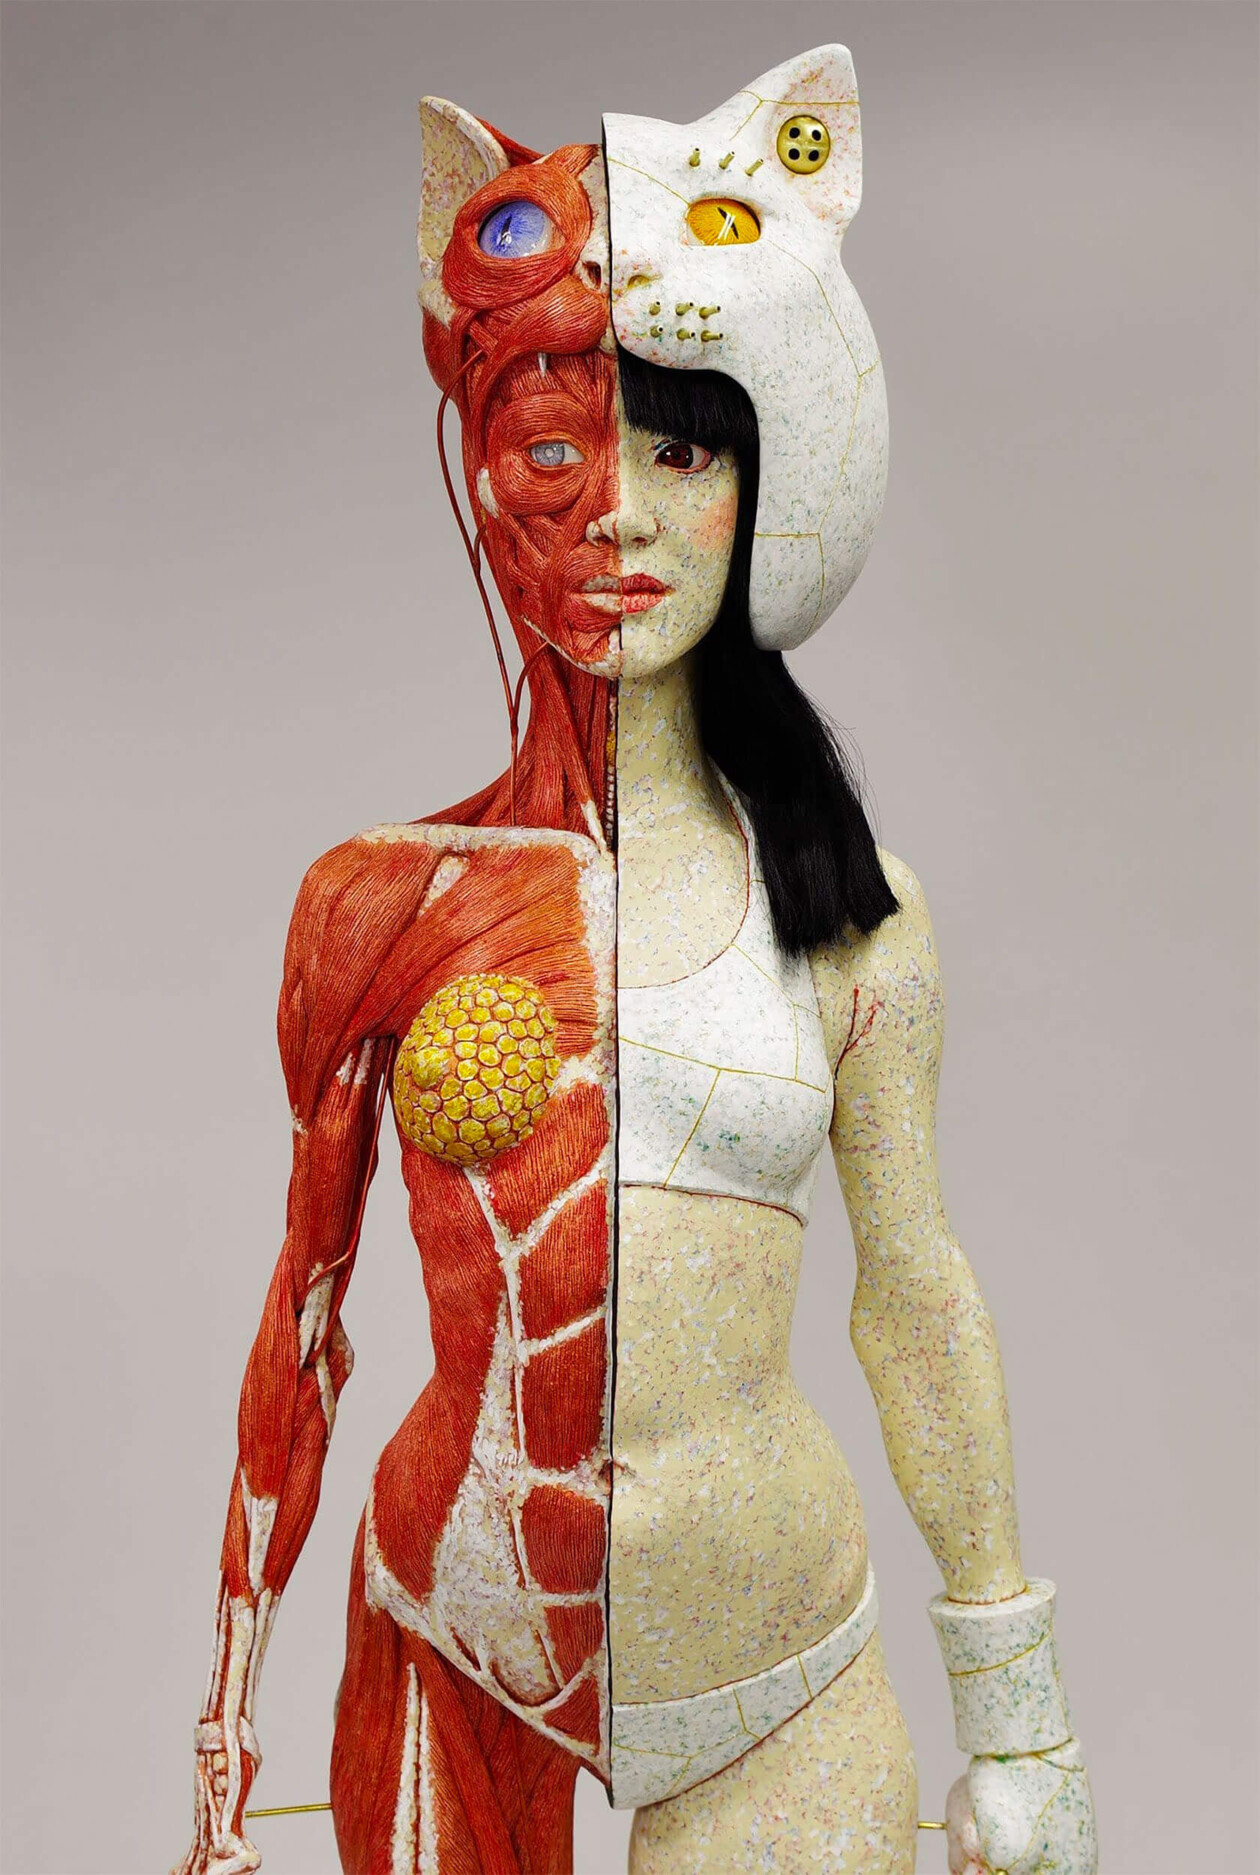 Masao Kinoshita’s Sculptures Explore Myth, Religion, And The Human Form (8)